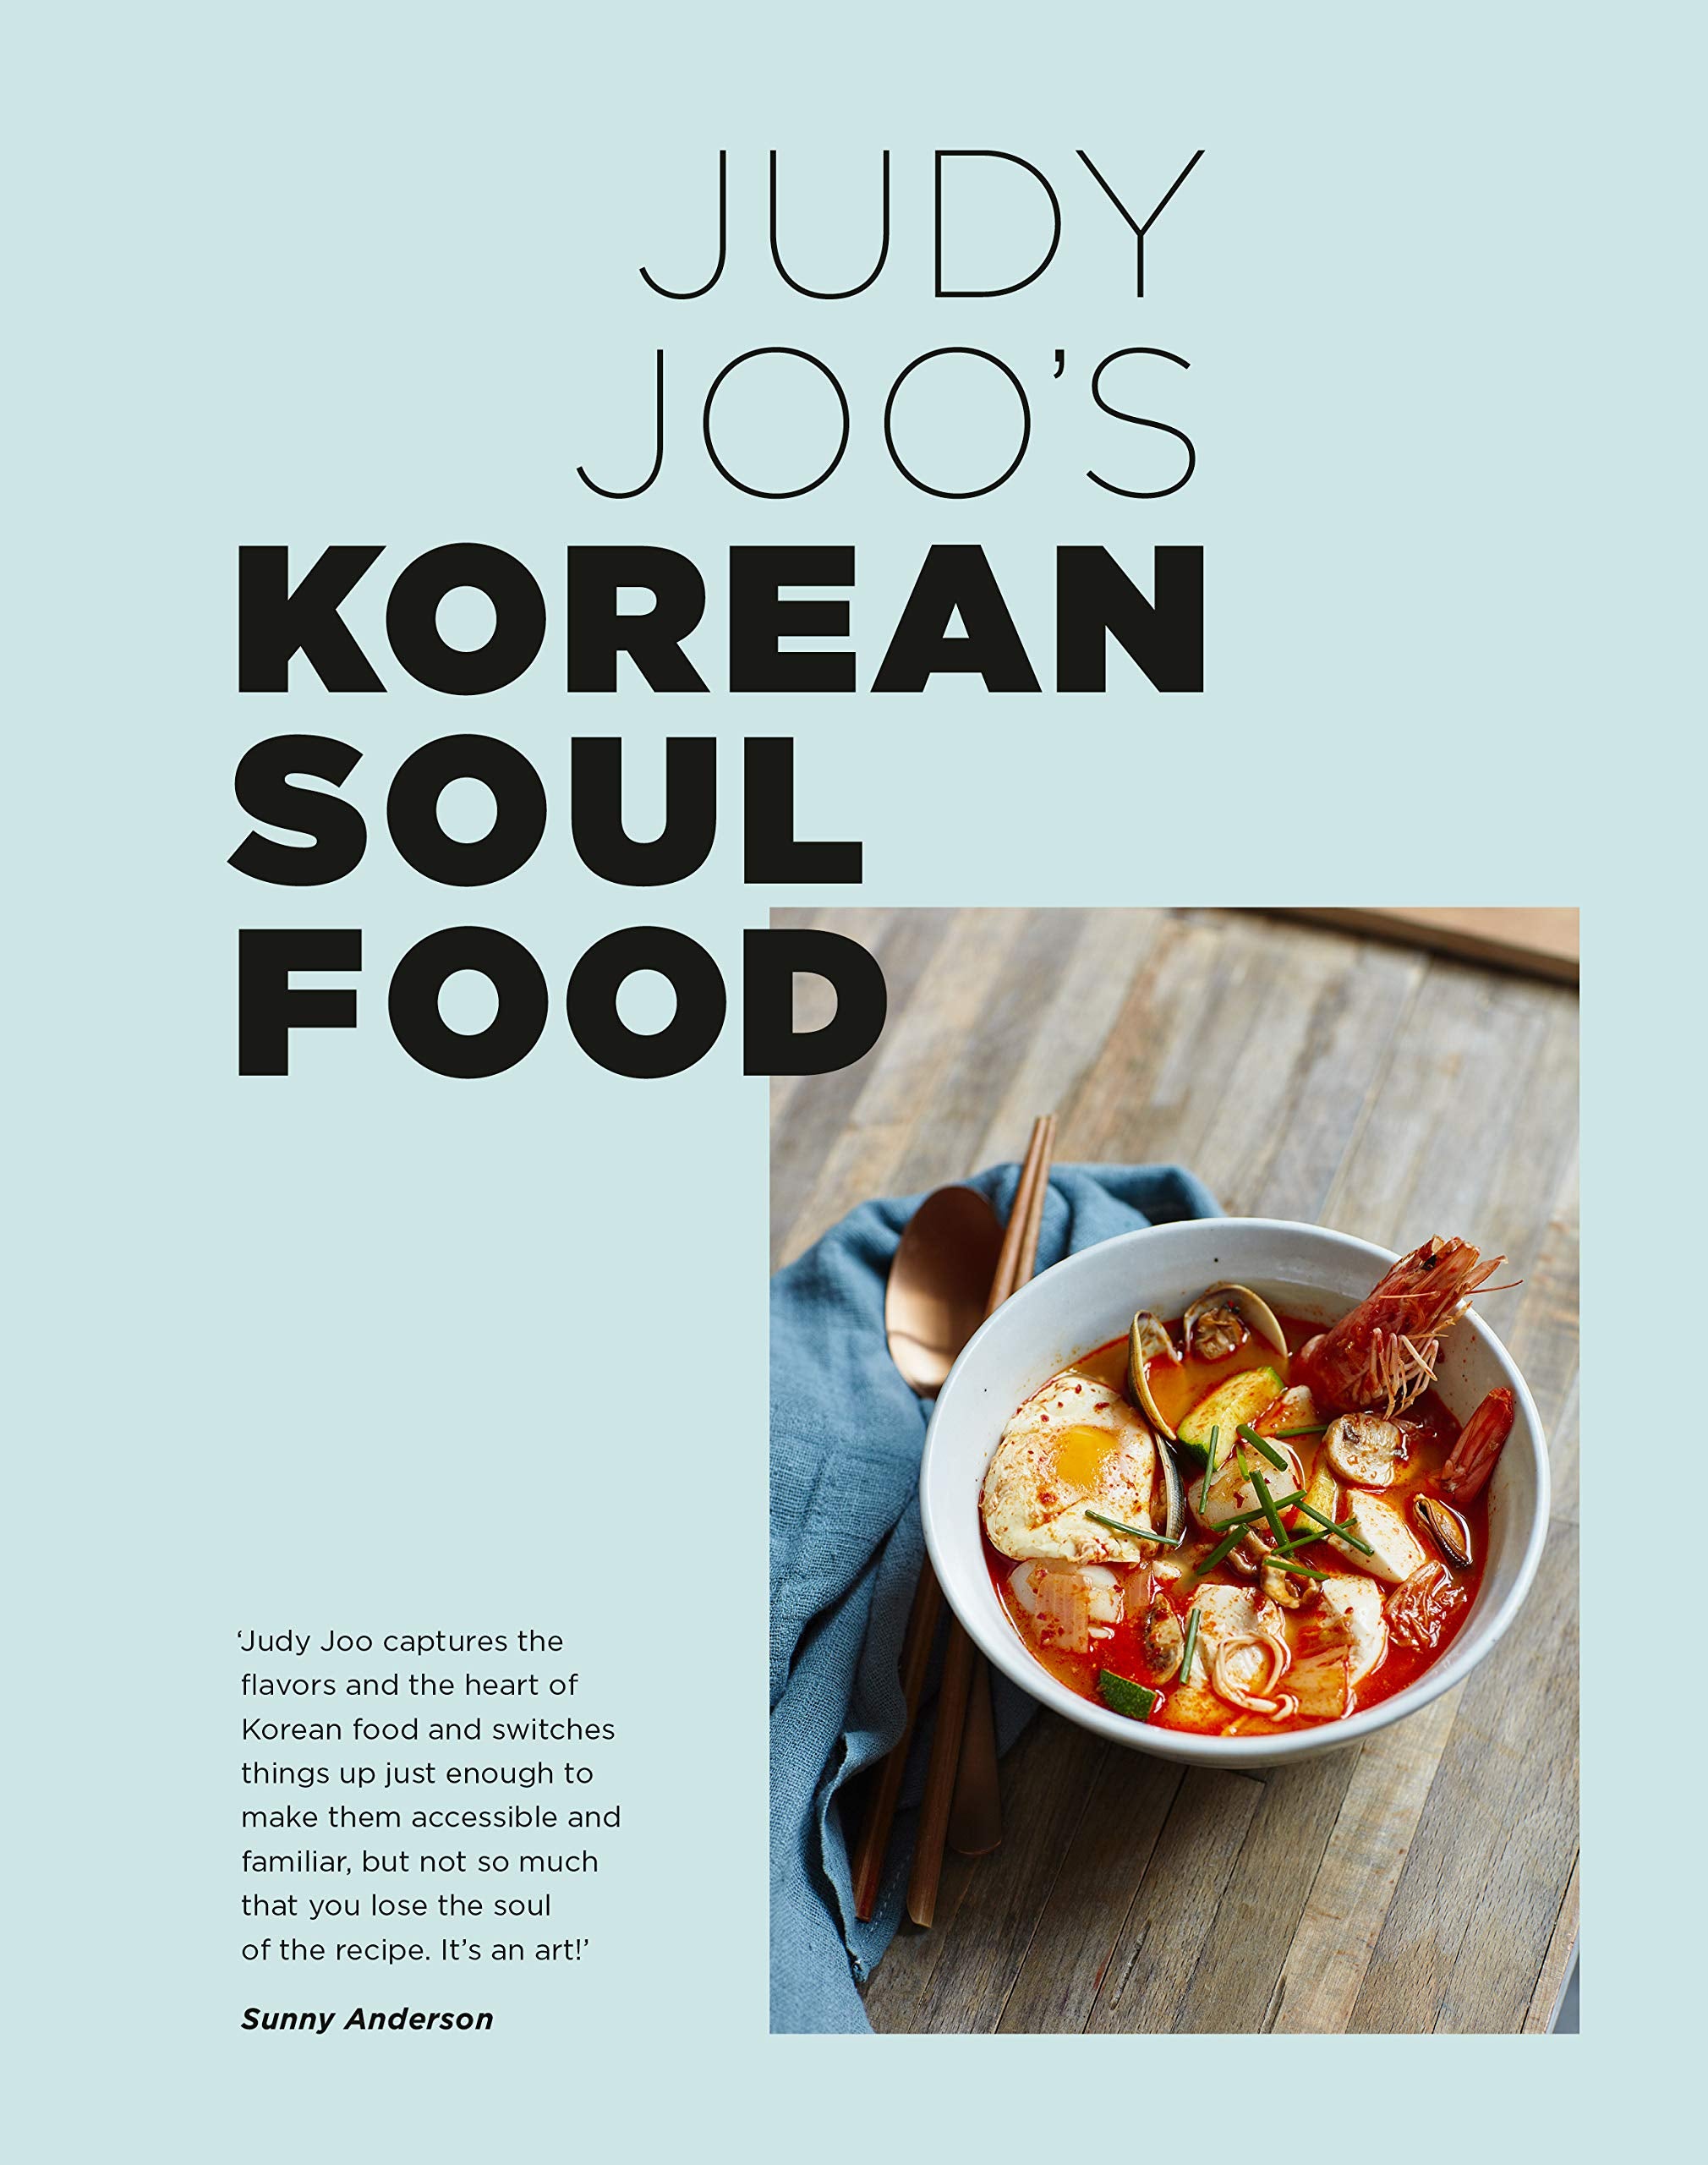 Judy Joo's Korean Soul Food: Authentic Dishes and Modern Twists (Judy Joo)